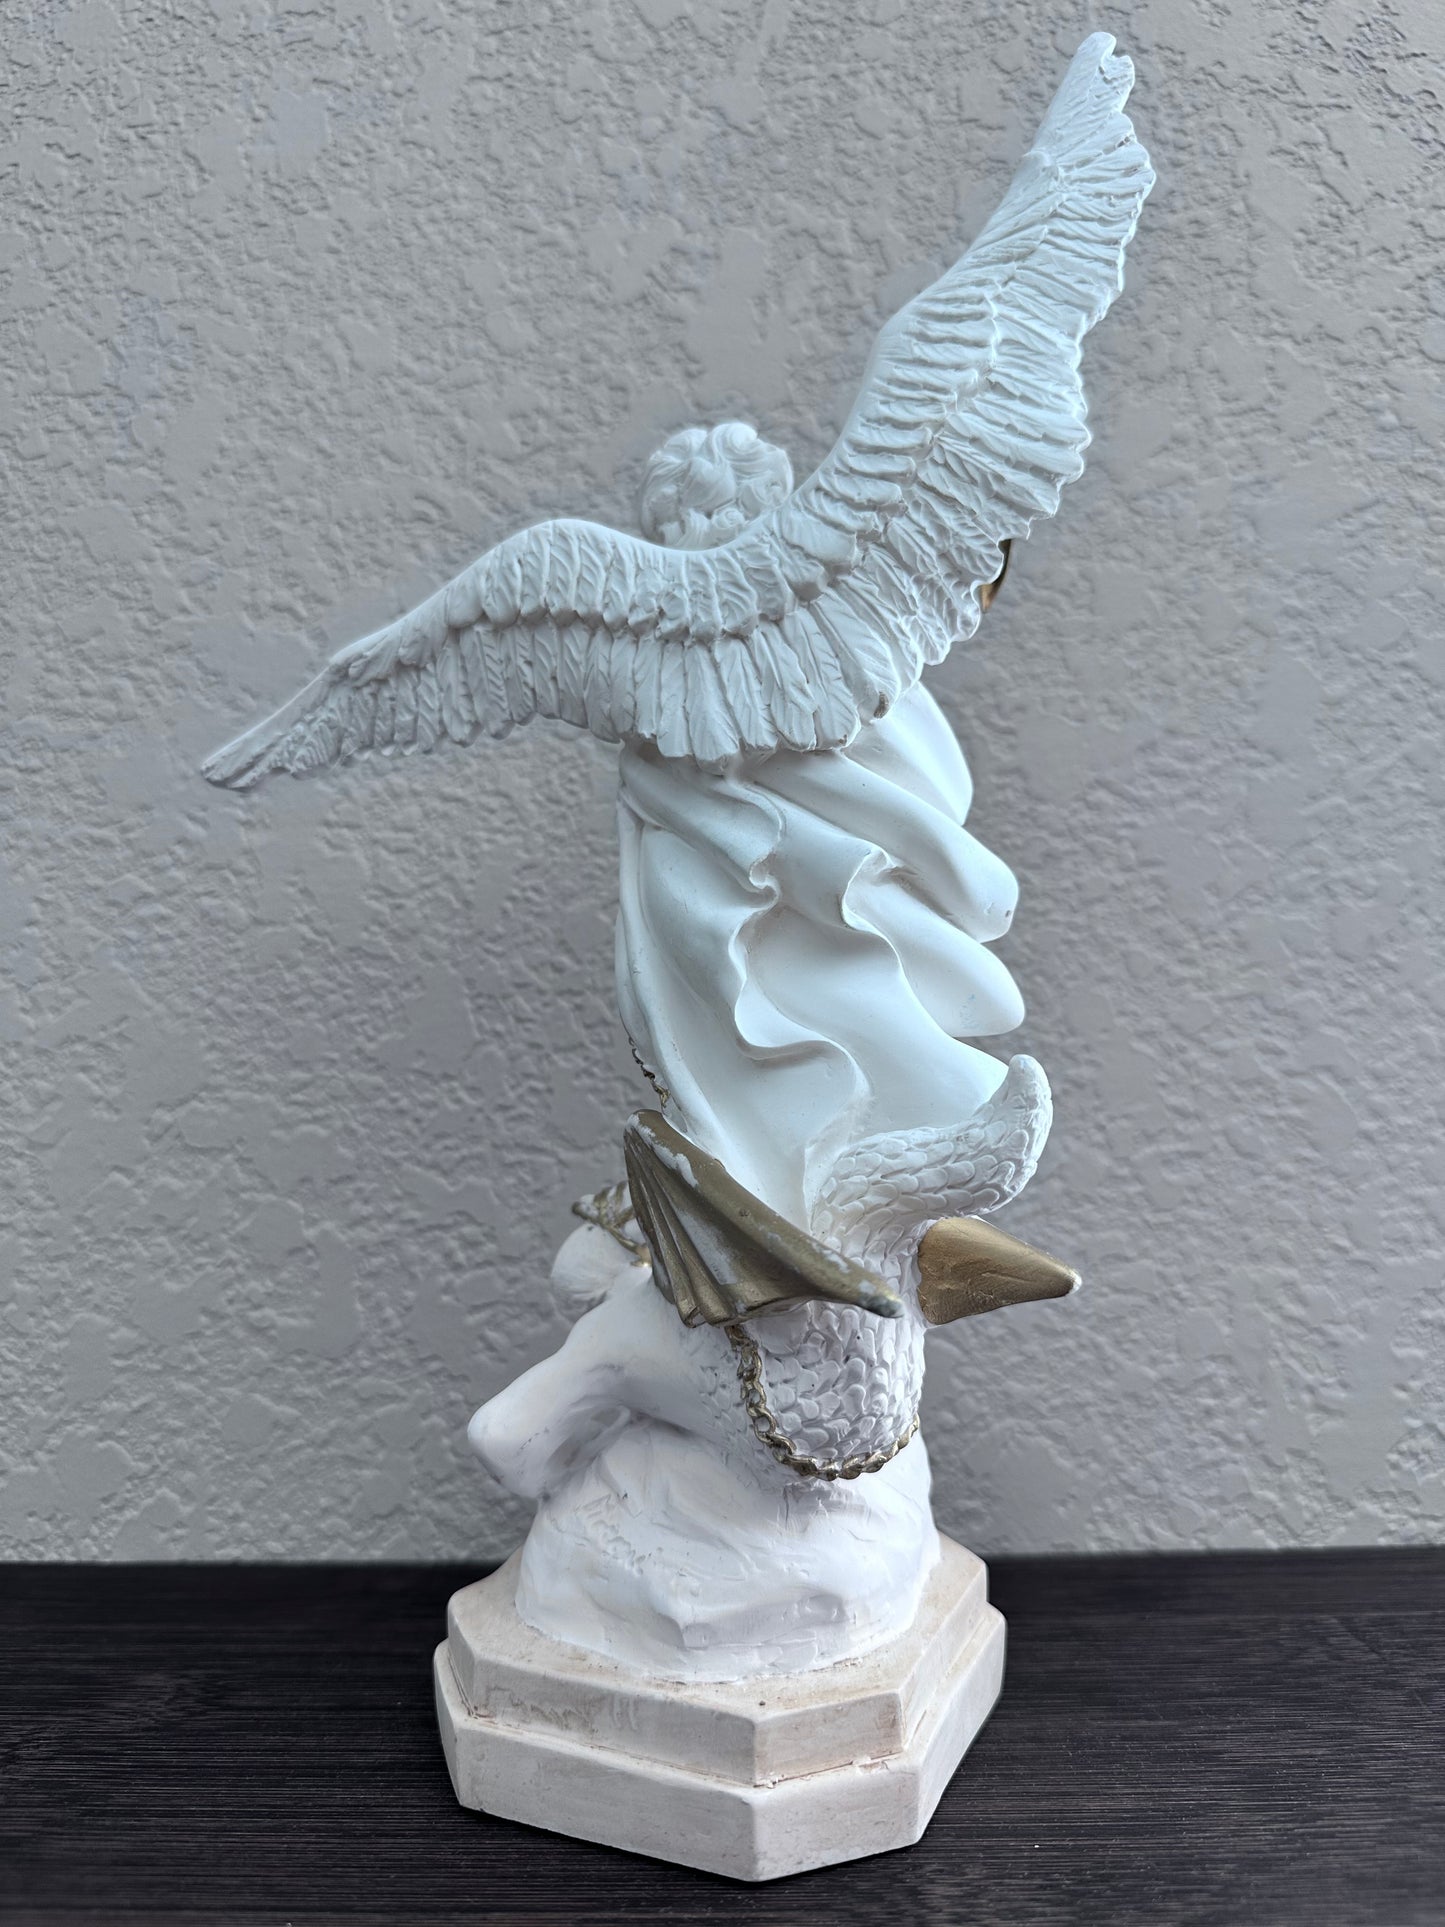 Statua di San Michele Arcangelo in resina di colore bianco 13 pollici